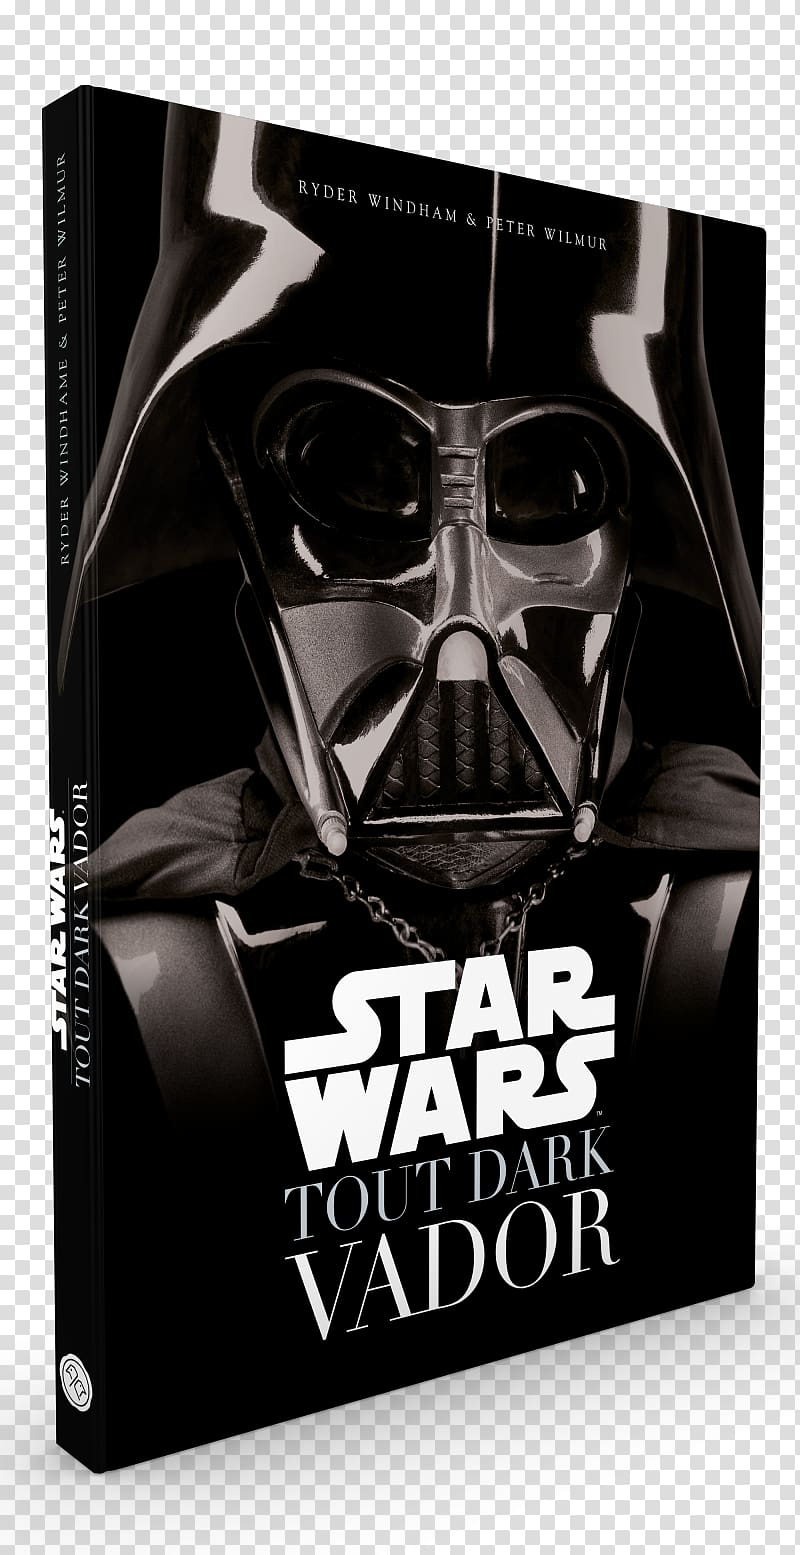 Star Wars, Tout Dark Vador Anakin Skywalker Clone Wars Lego Star Wars, Fantomas transparent background PNG clipart